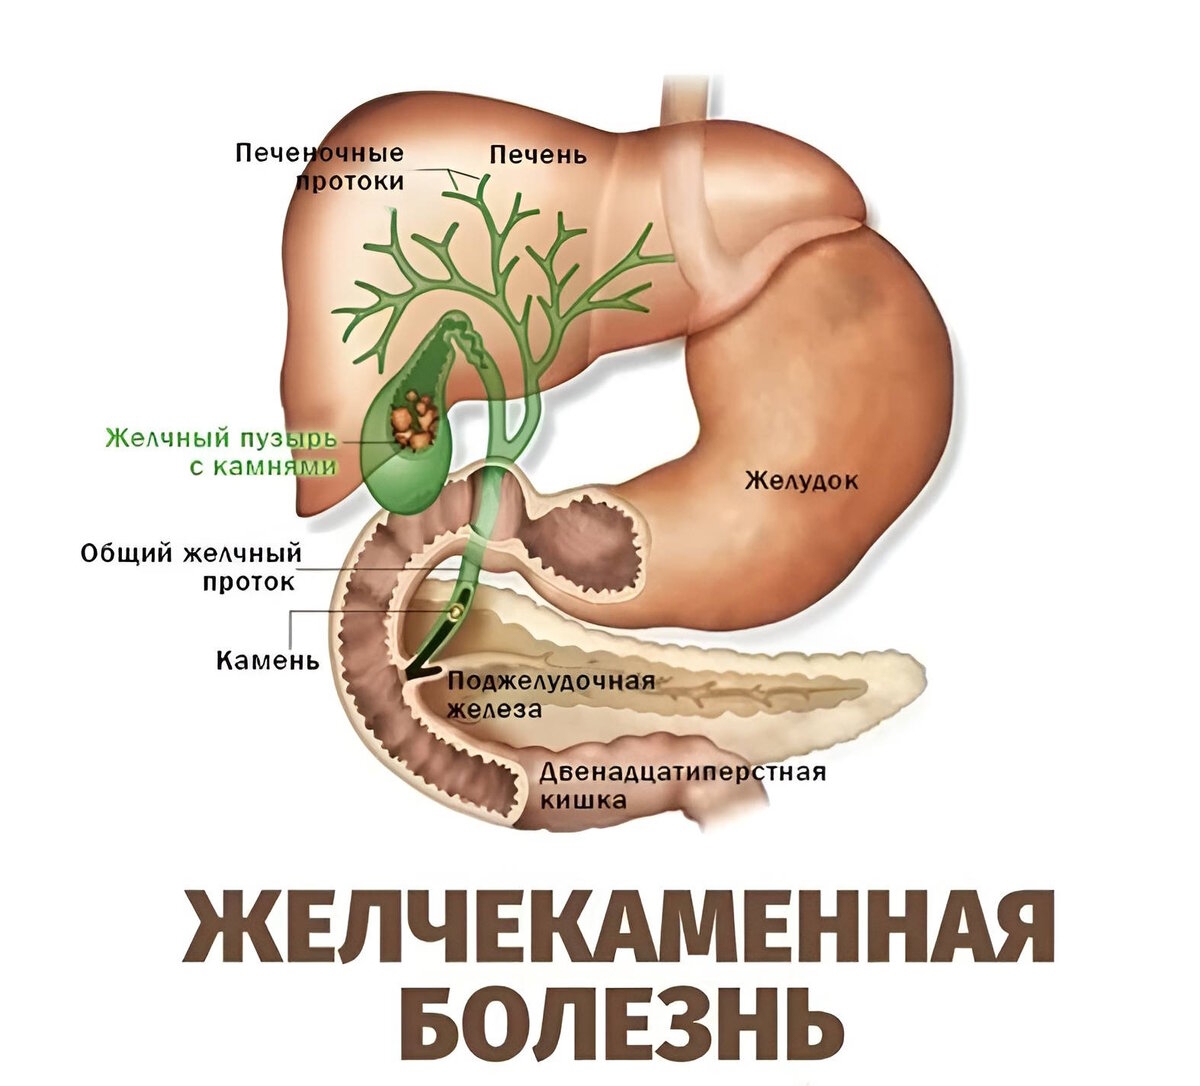 Баня желчный пузырь. Анатомия ЖКТ желчный пузырь. Желчный пузырь и желчные протоки анатомия. Камни поджелудочной железы ЖКБ. Желчекаменная болезнь анатомия.